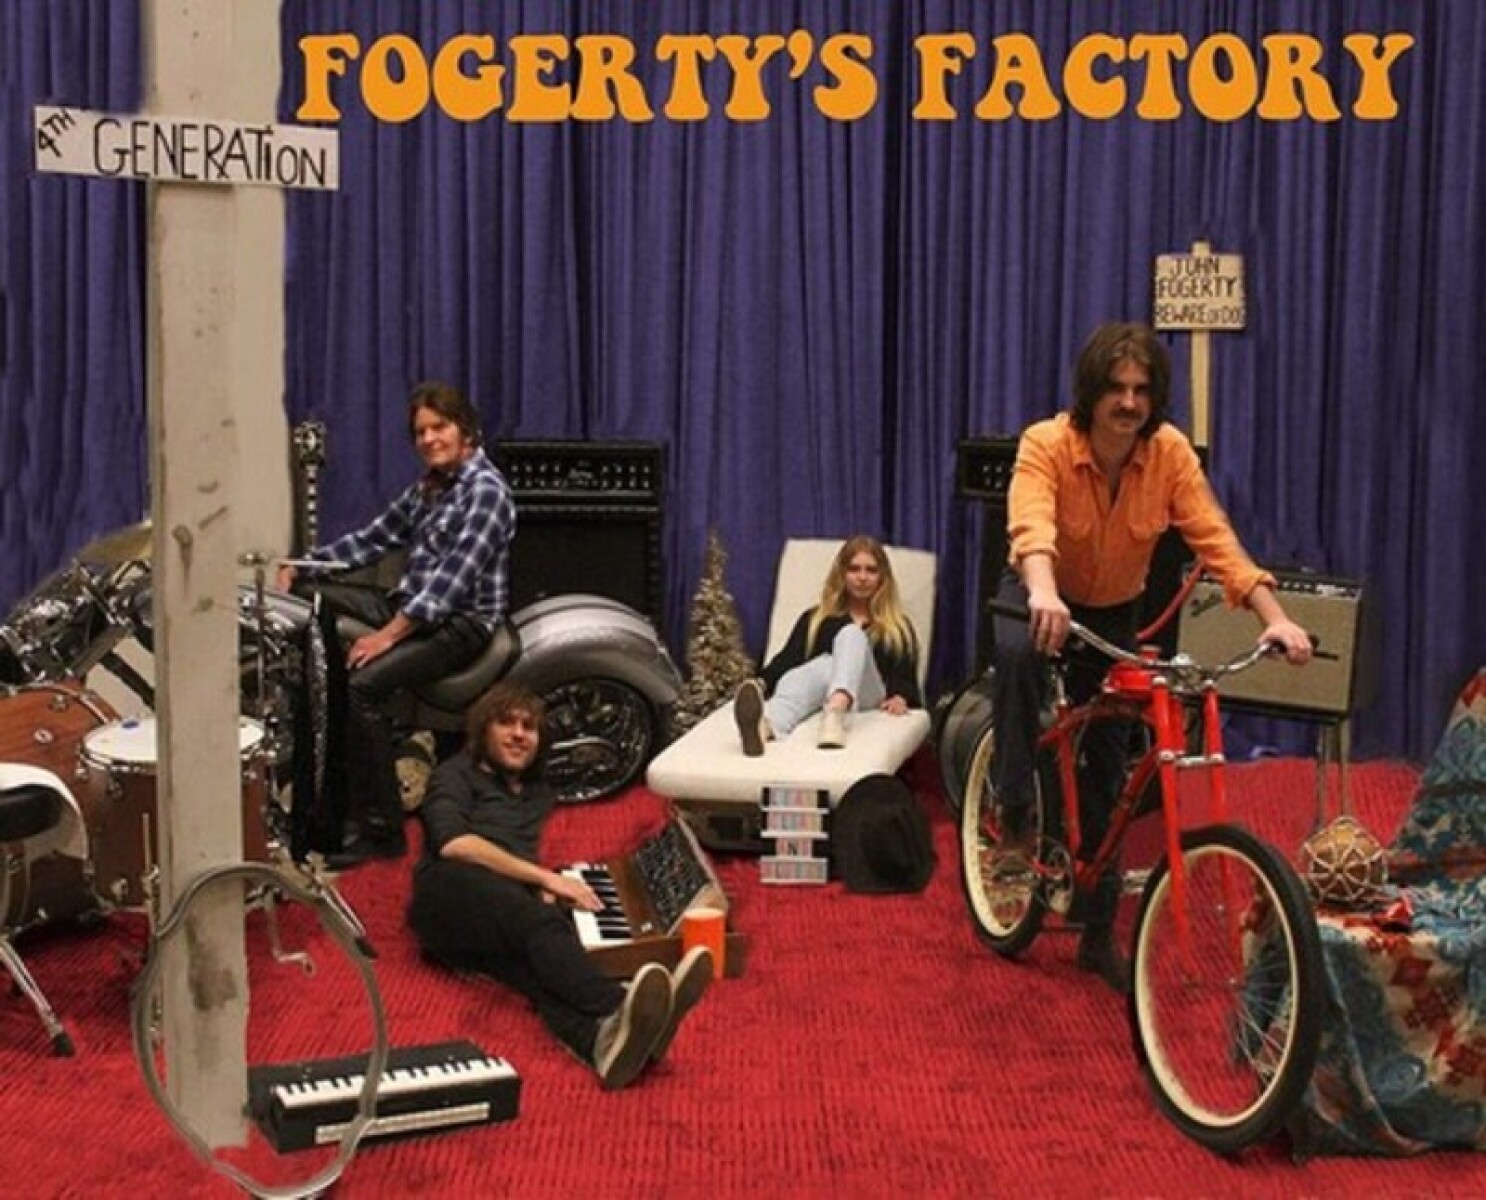 Fogerty John - Fogerty S Factory 